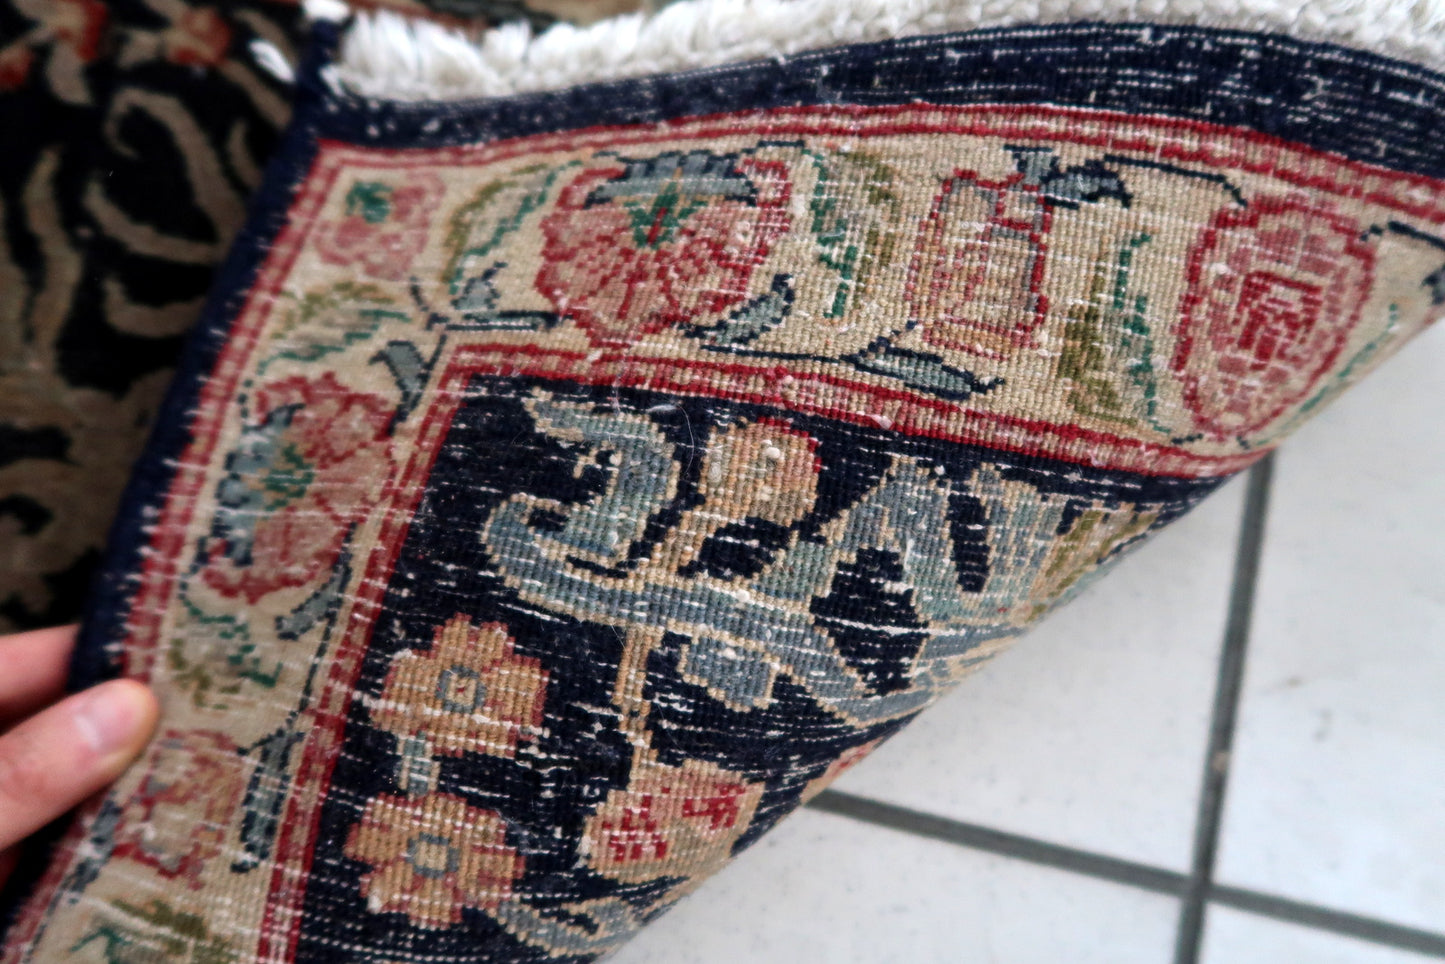 Handmade vintage Persian Tabriz rug 1970s